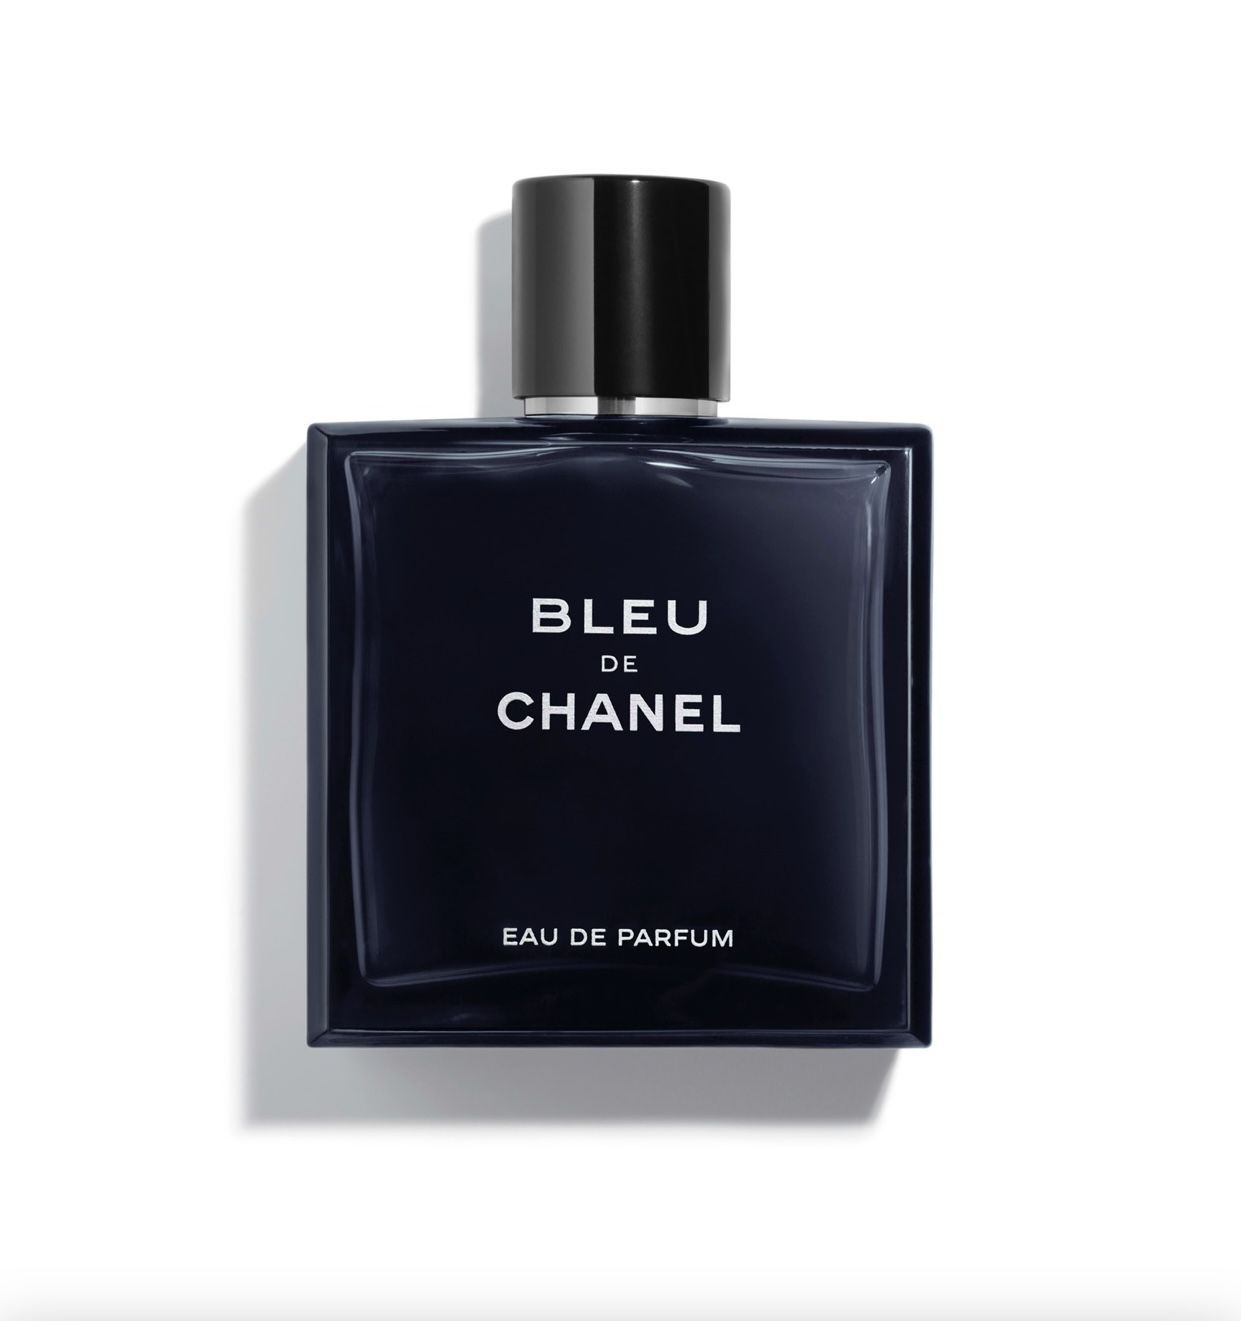 Bleu the Chanel